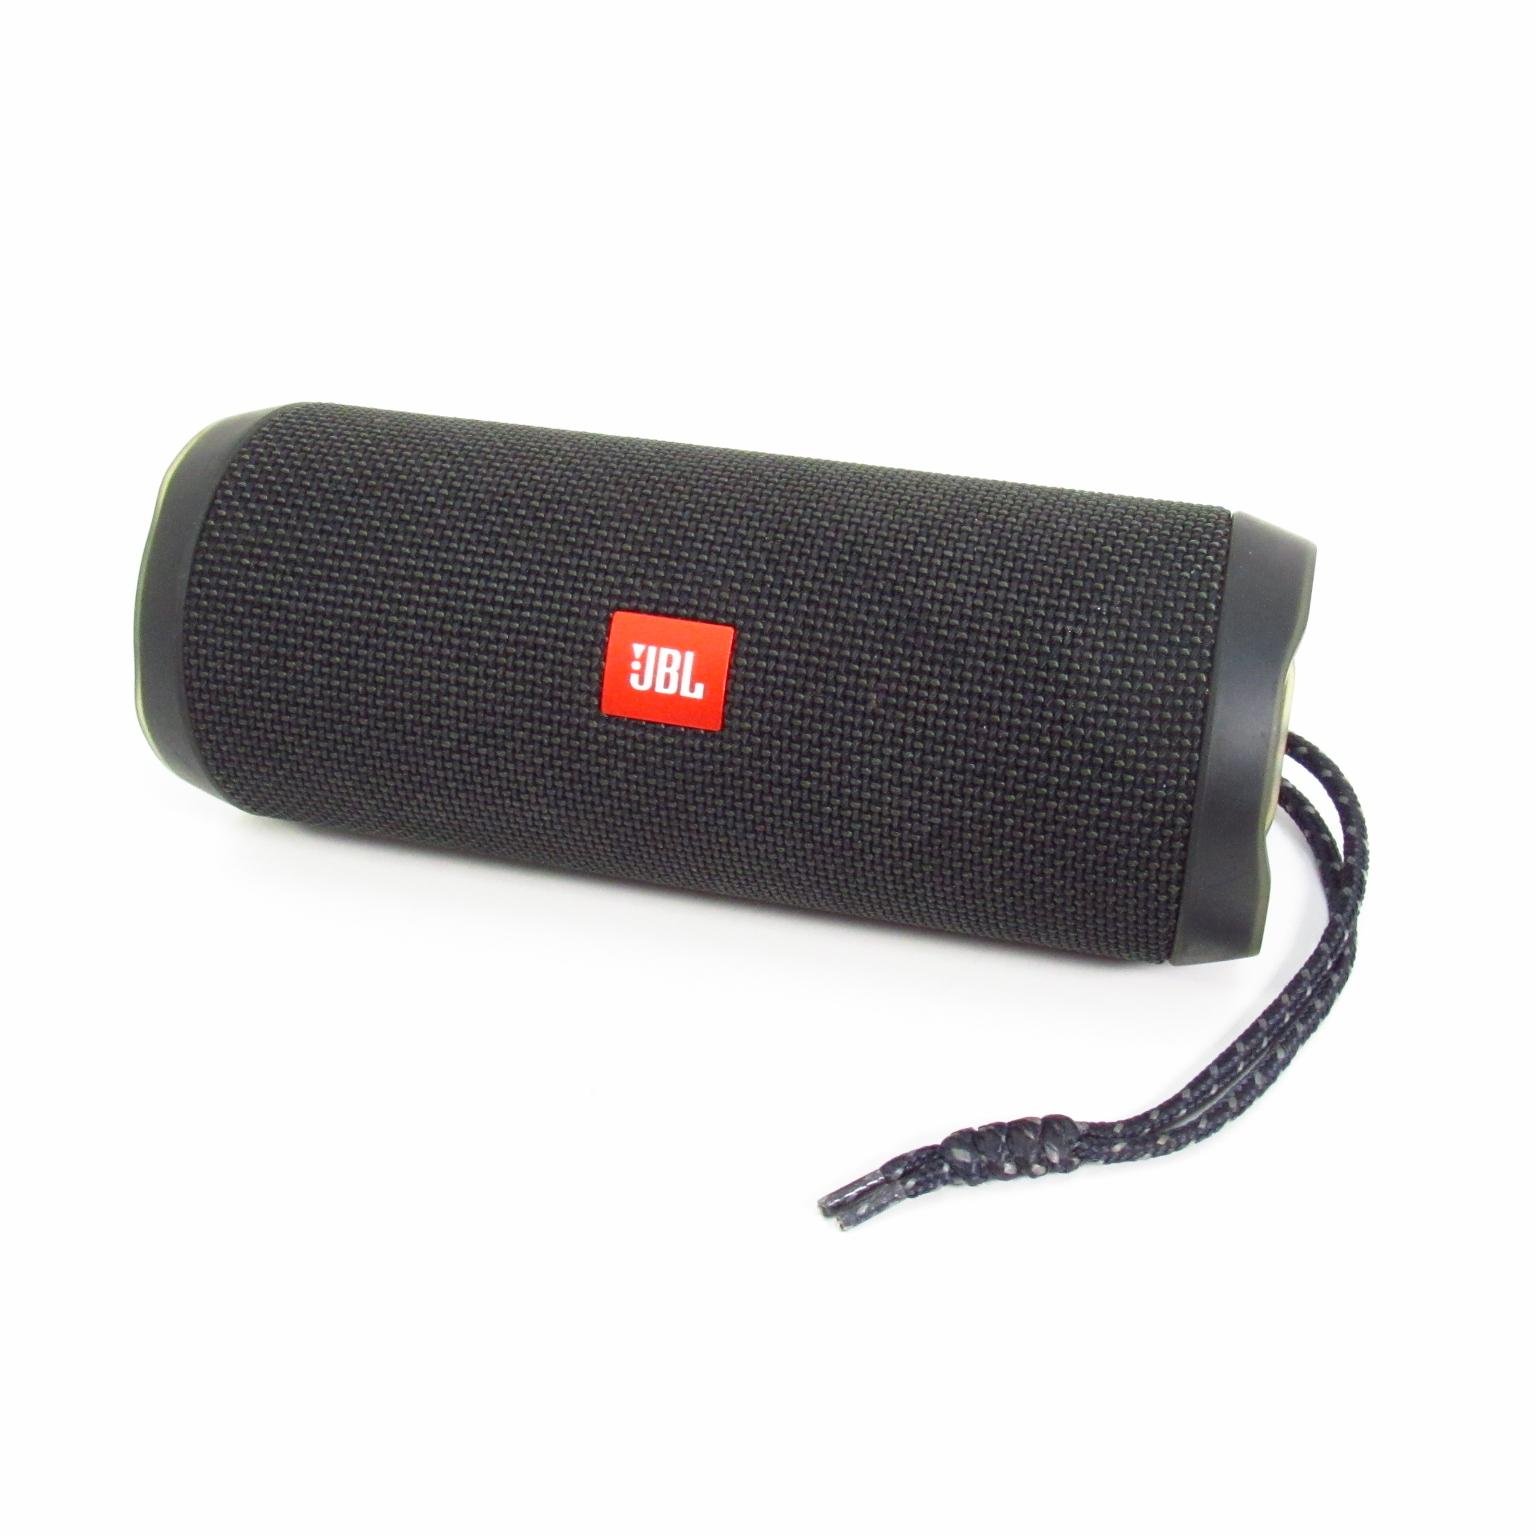 JBL Flip 4 Portable Wireless Bluetooth Speaker - Black